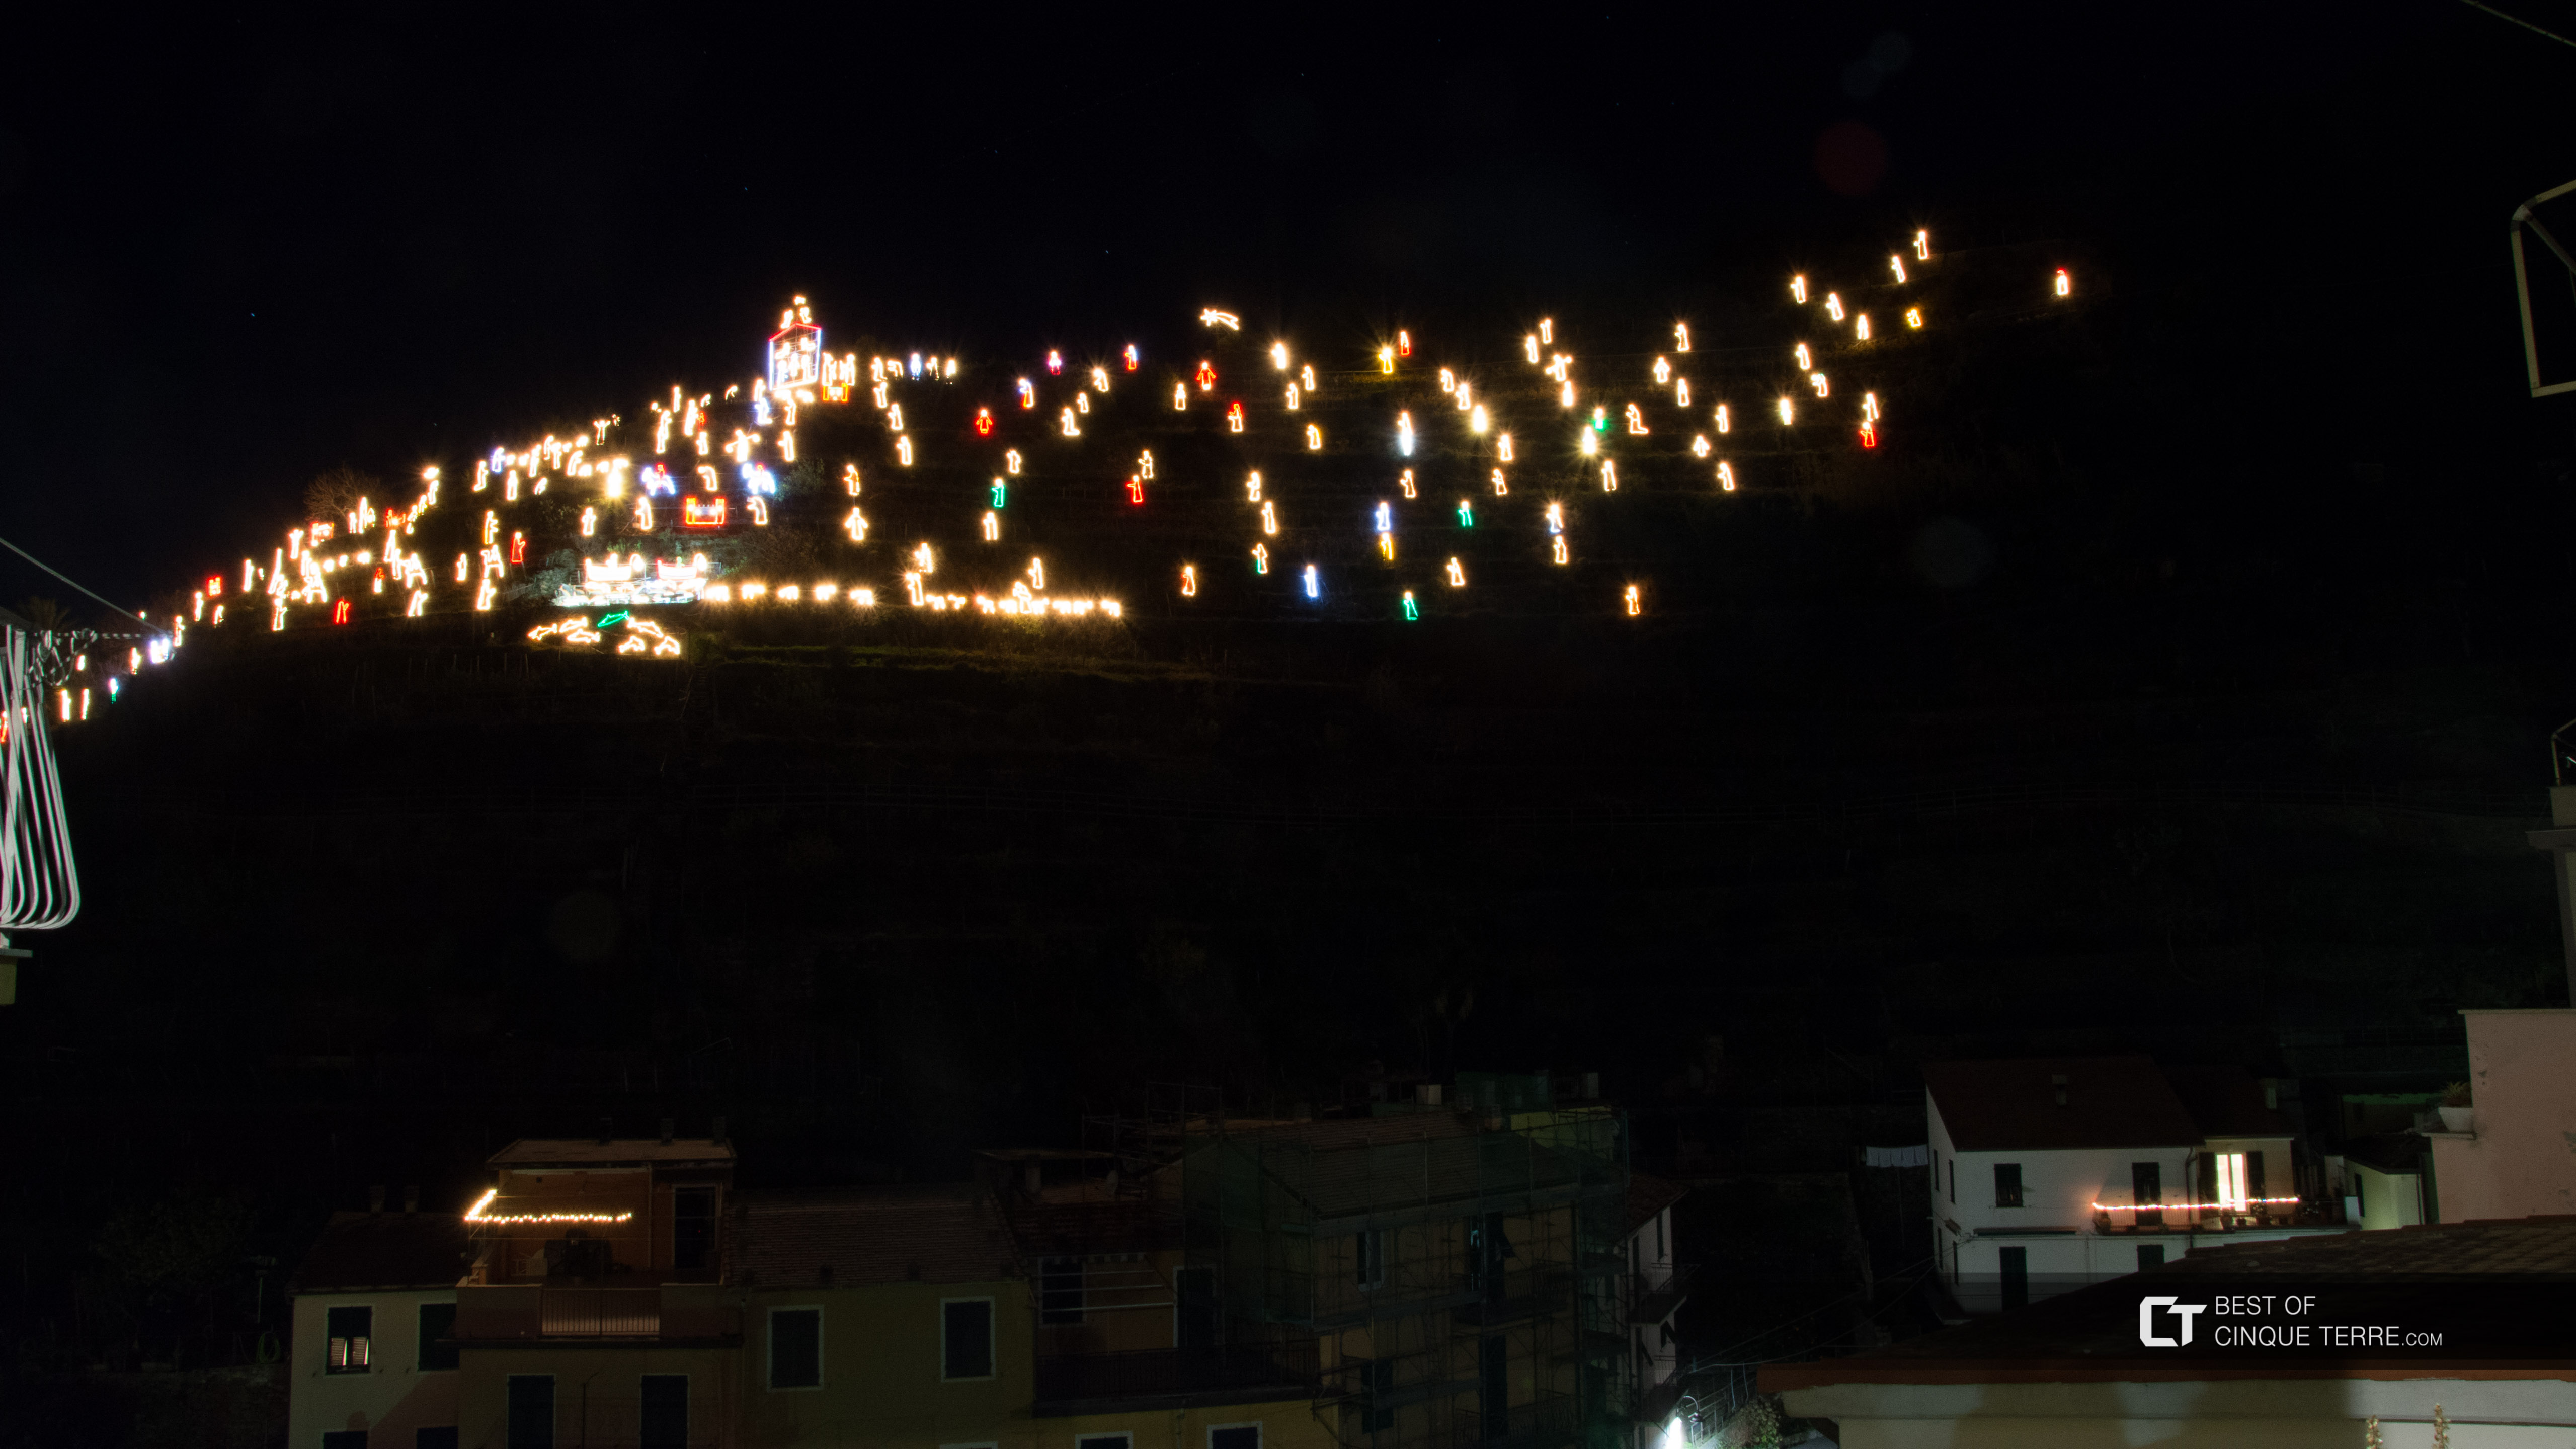 Christmas nativity scene (Presepe), seen from the main square of the village, Manarola, Cinque Terre, Italy